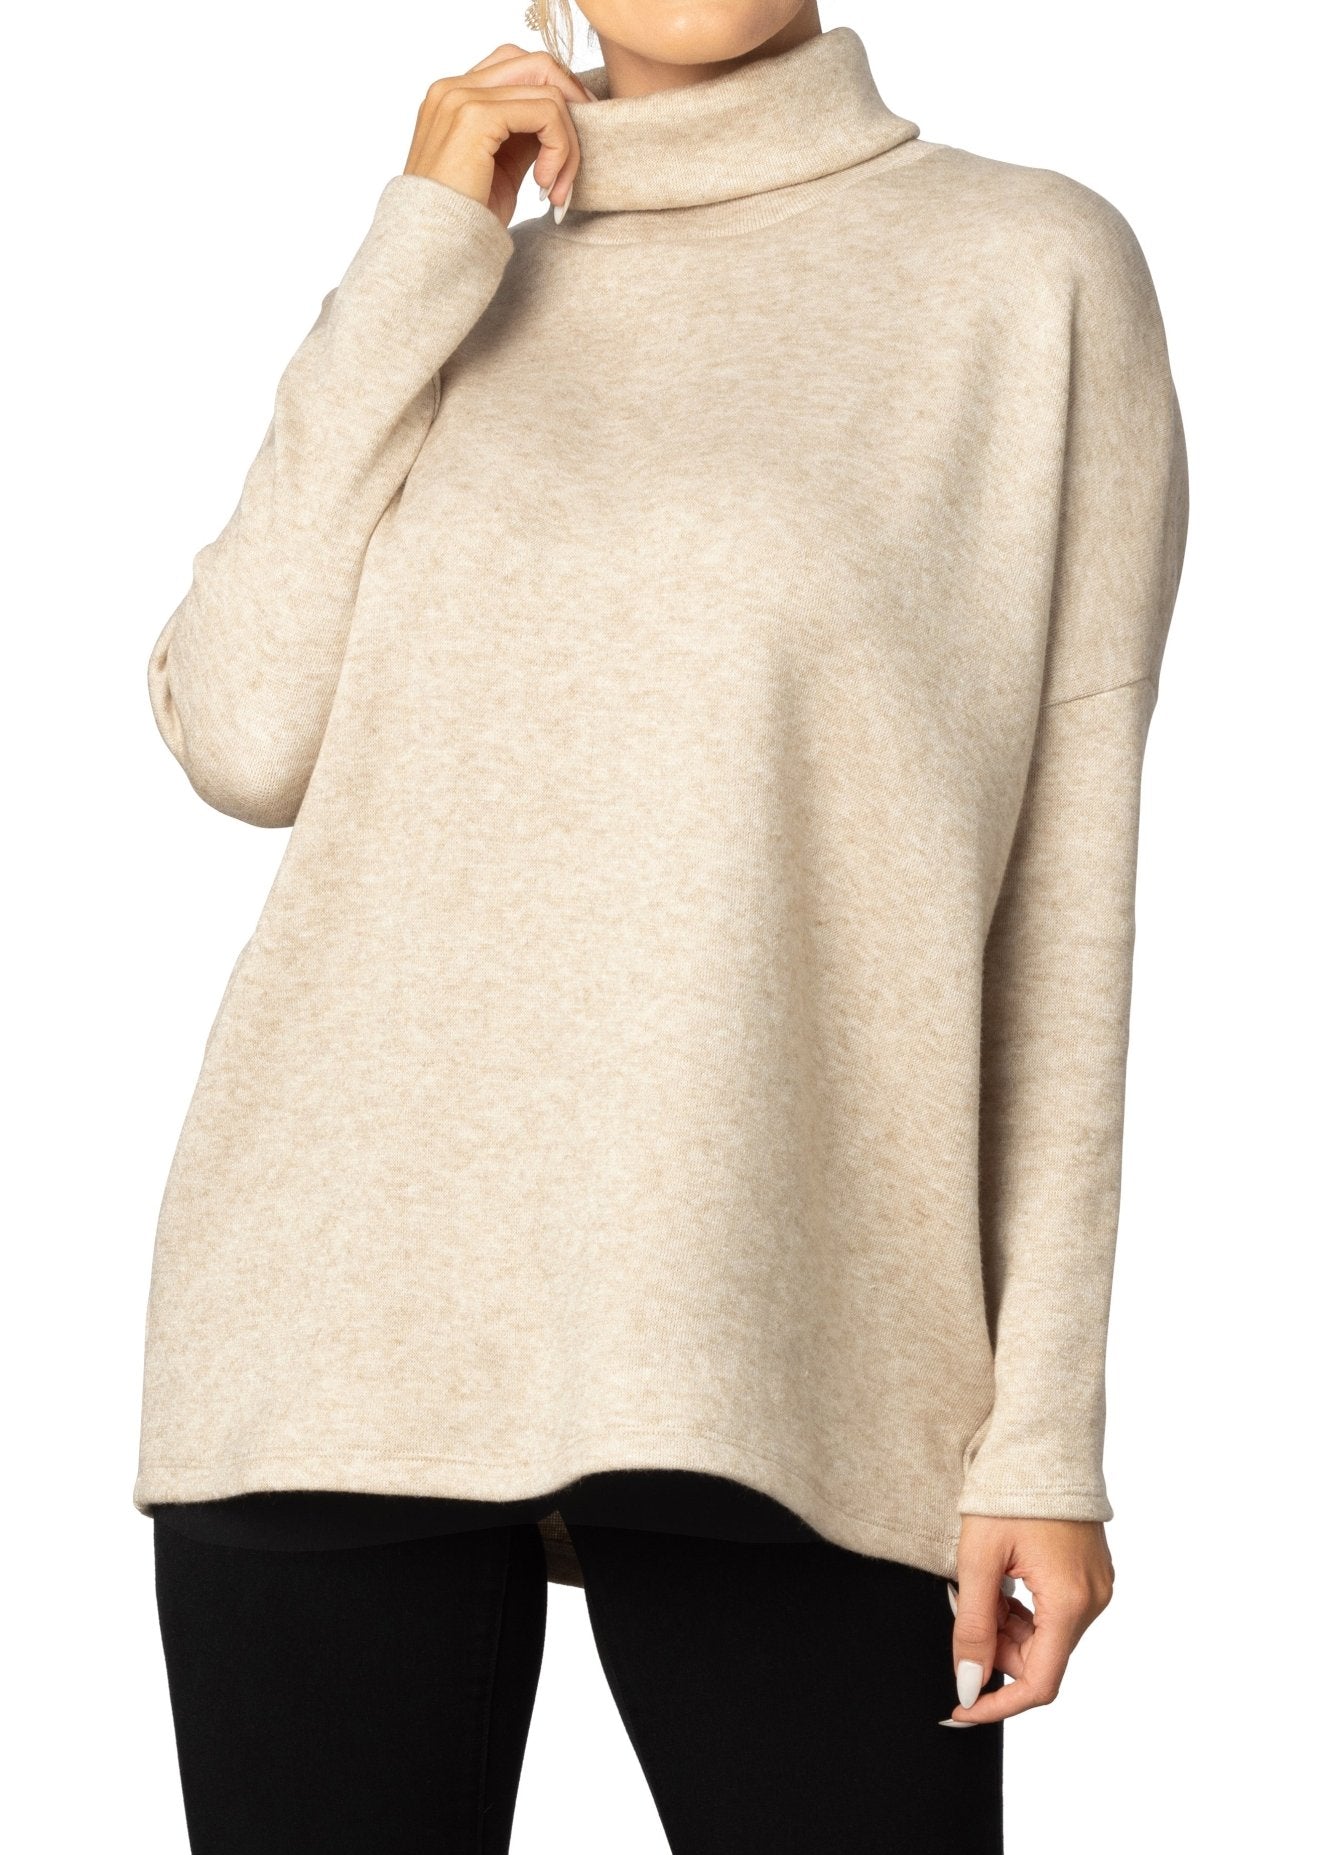 Paris Turtleneck Tunic Sweater - DressbarnSweatshirts & Hoodies